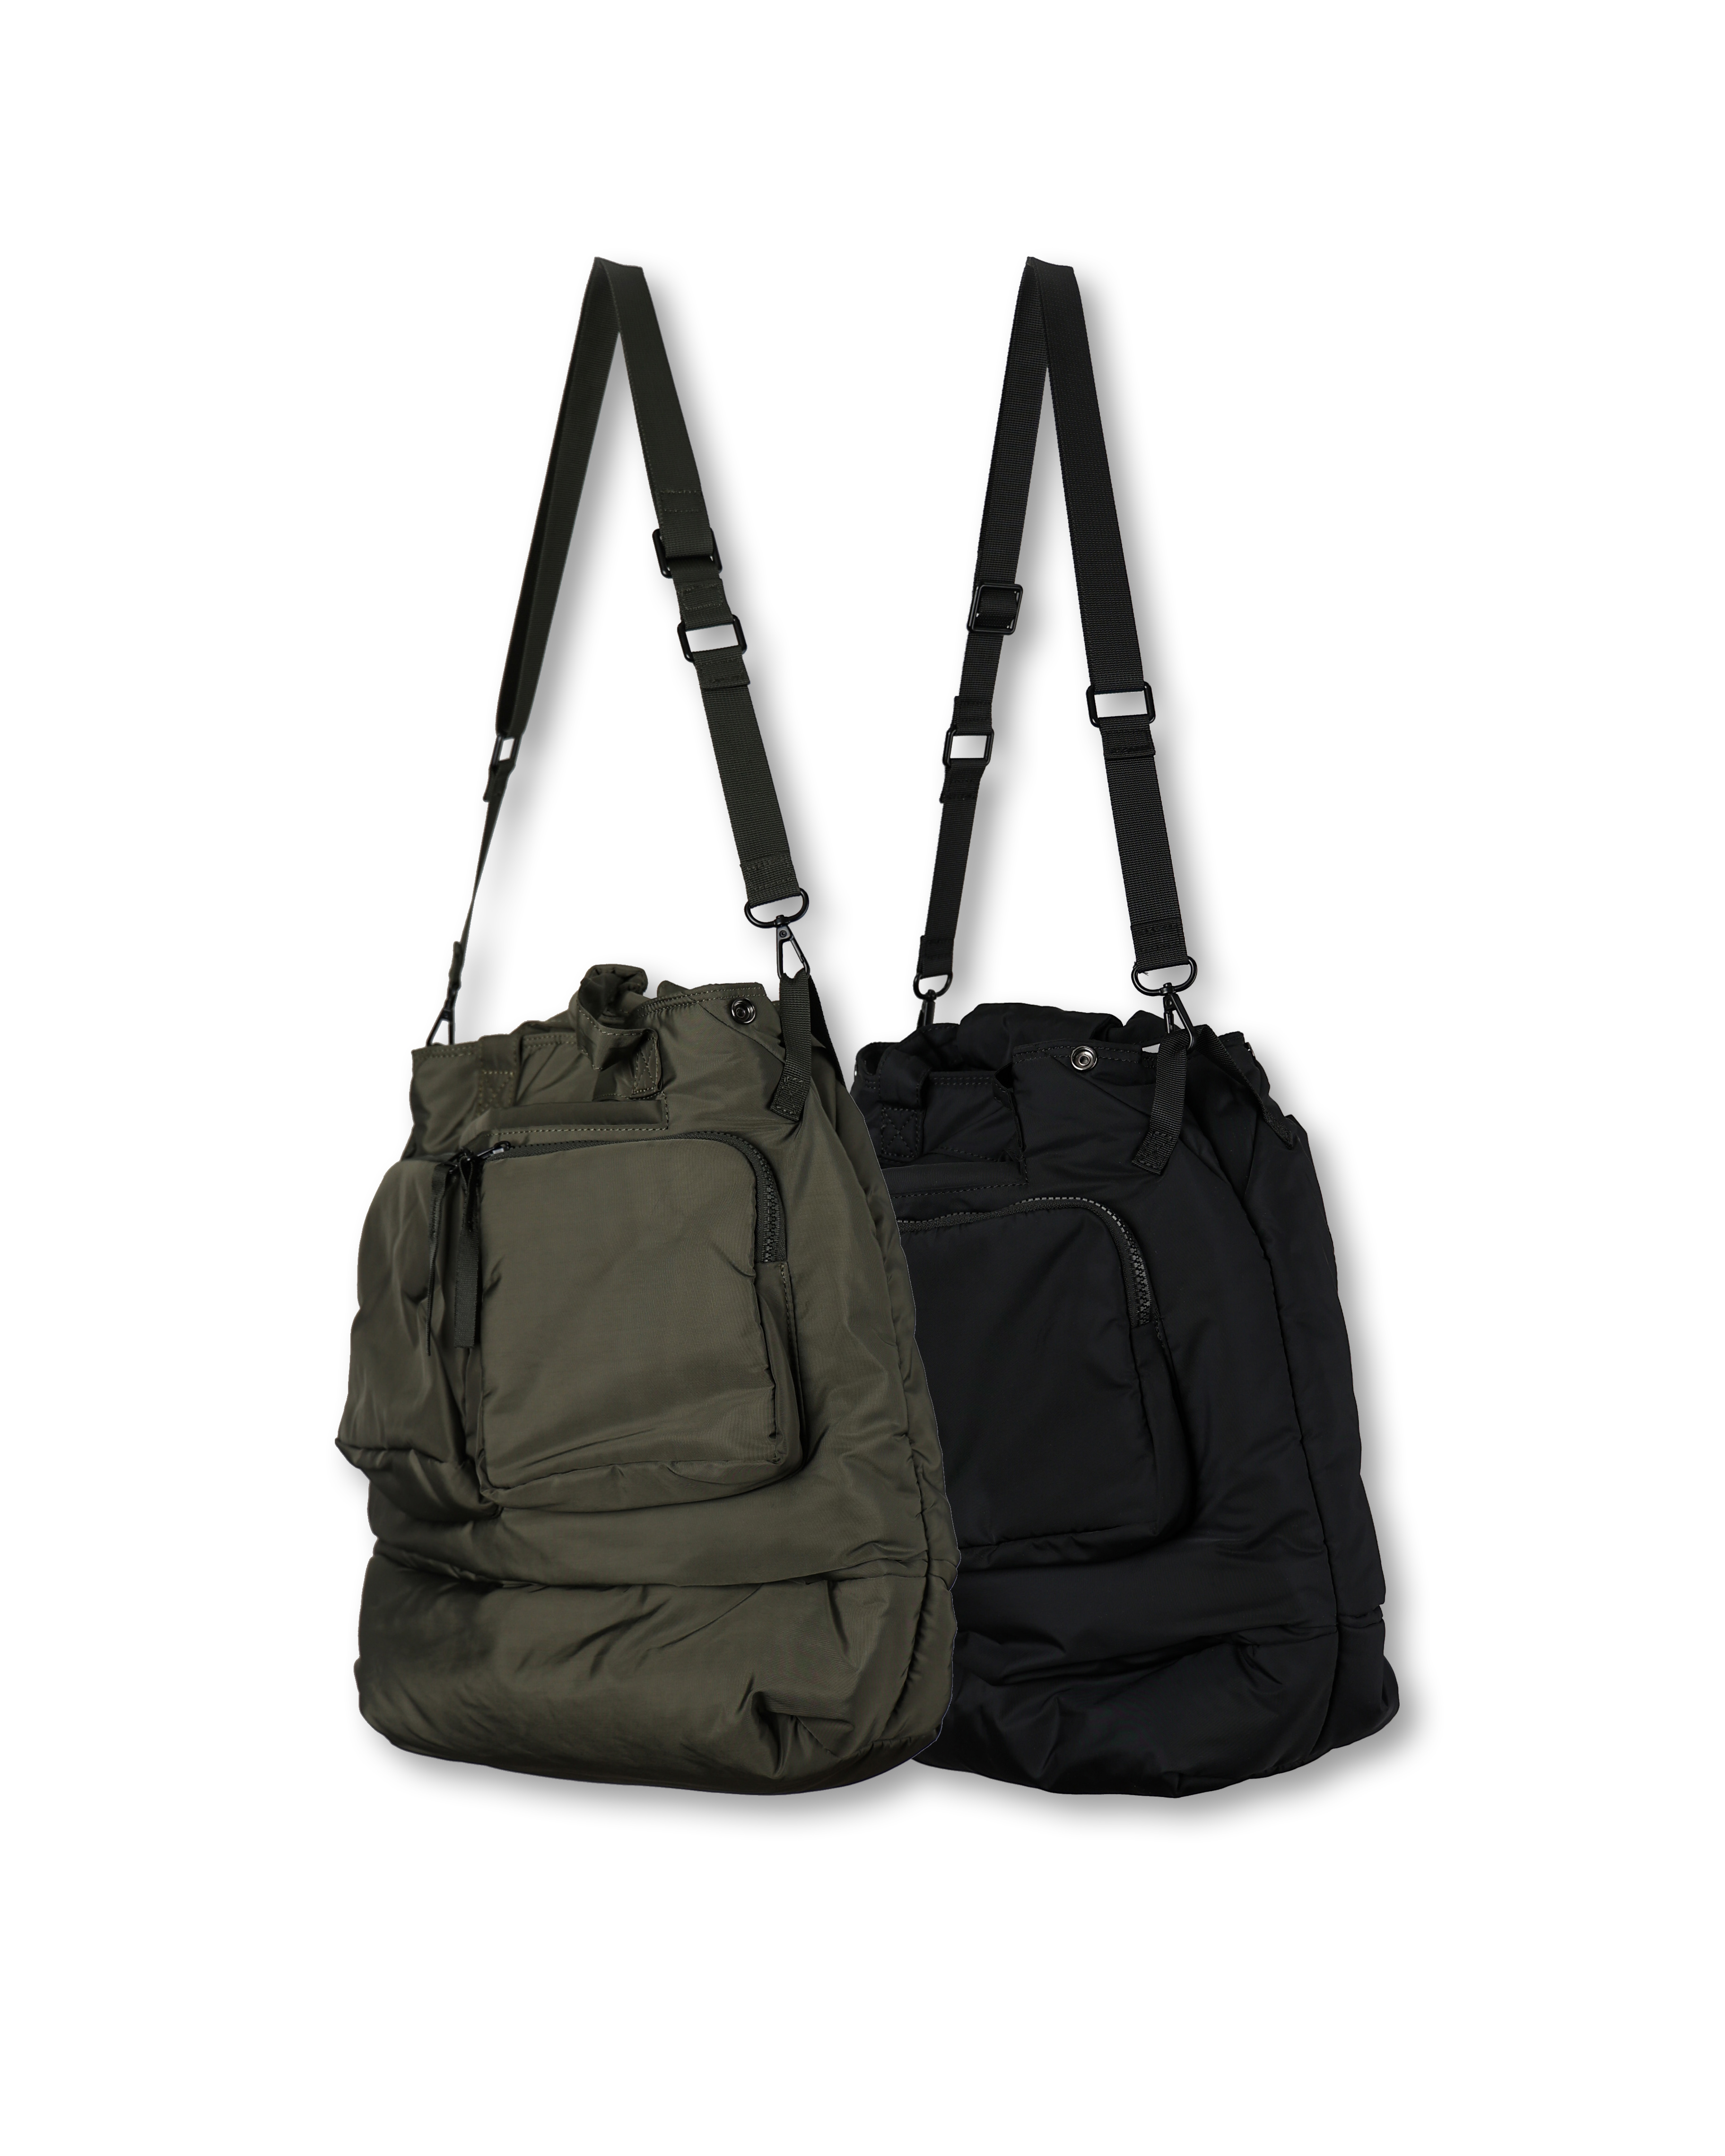 MOIIN 8490 Padded Pocket Cross Bag (Black/Olive)